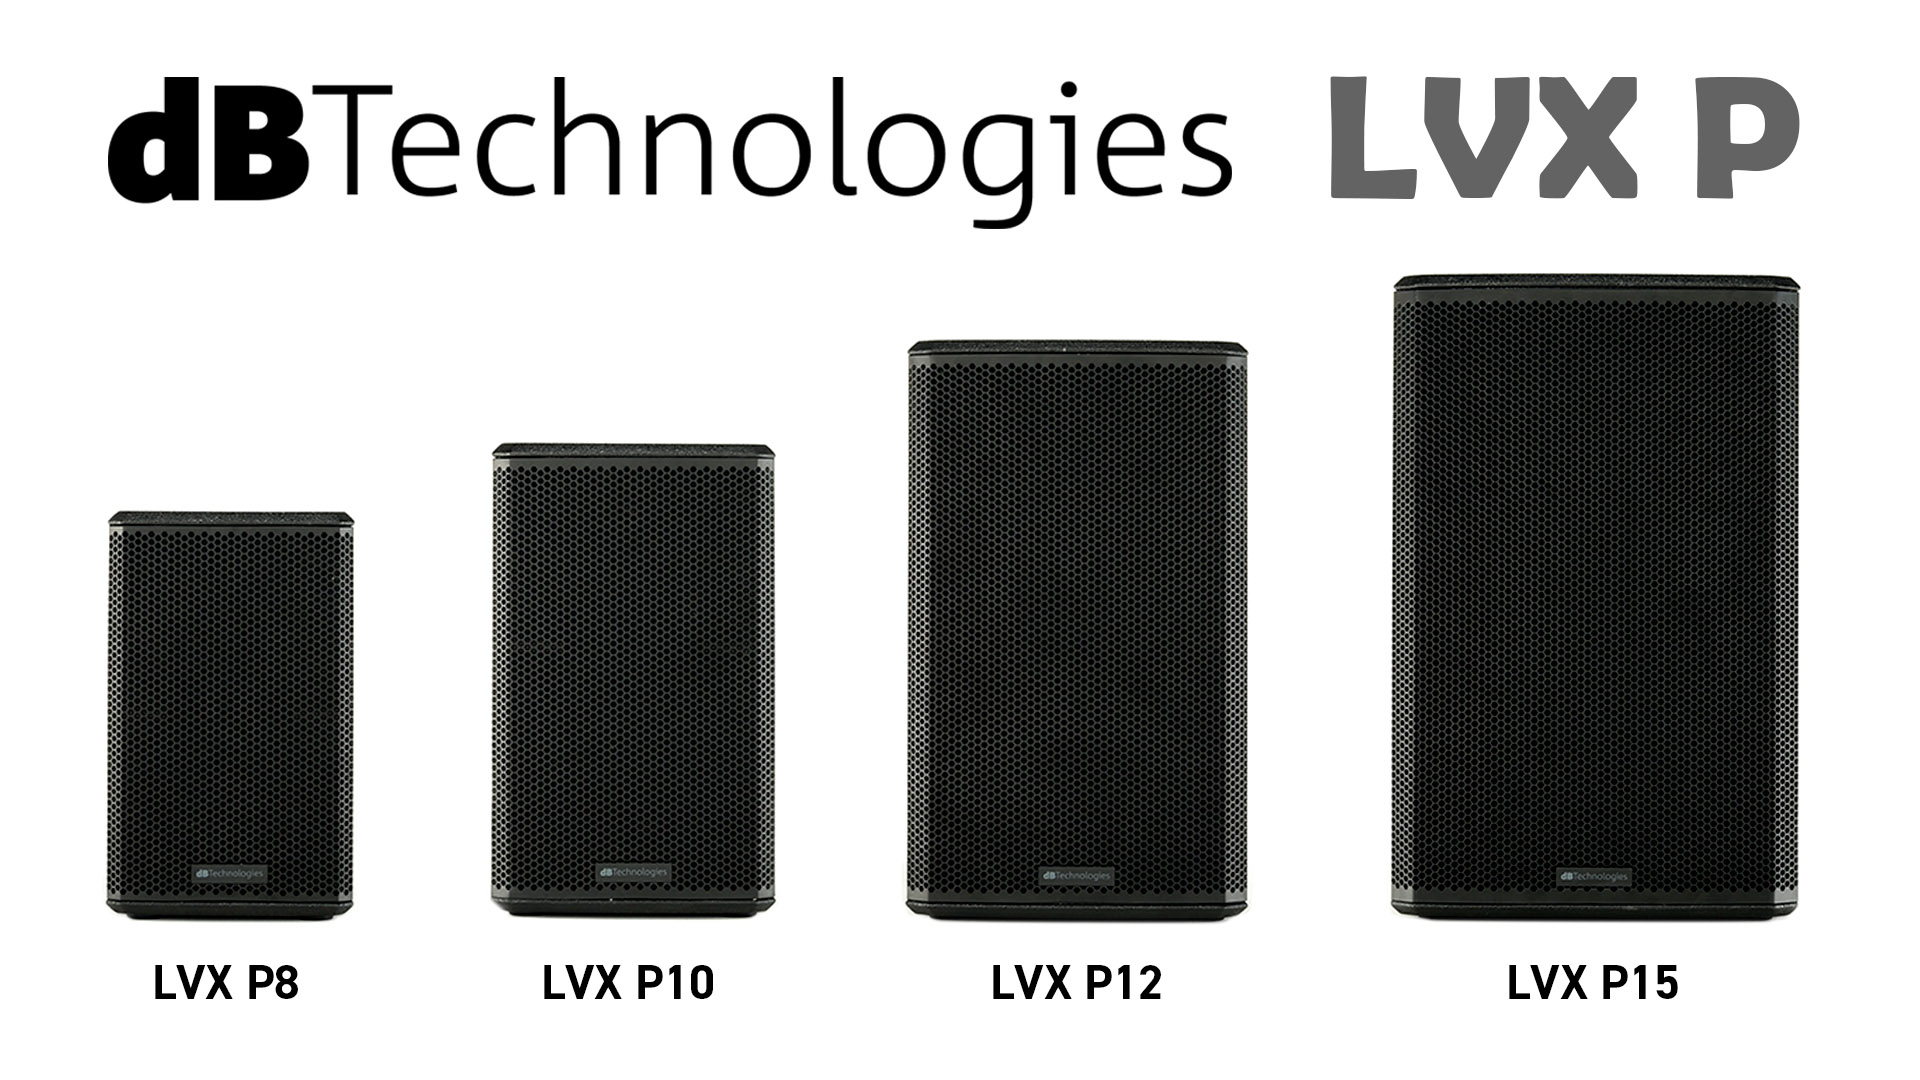 dBTechnologies LVX P.